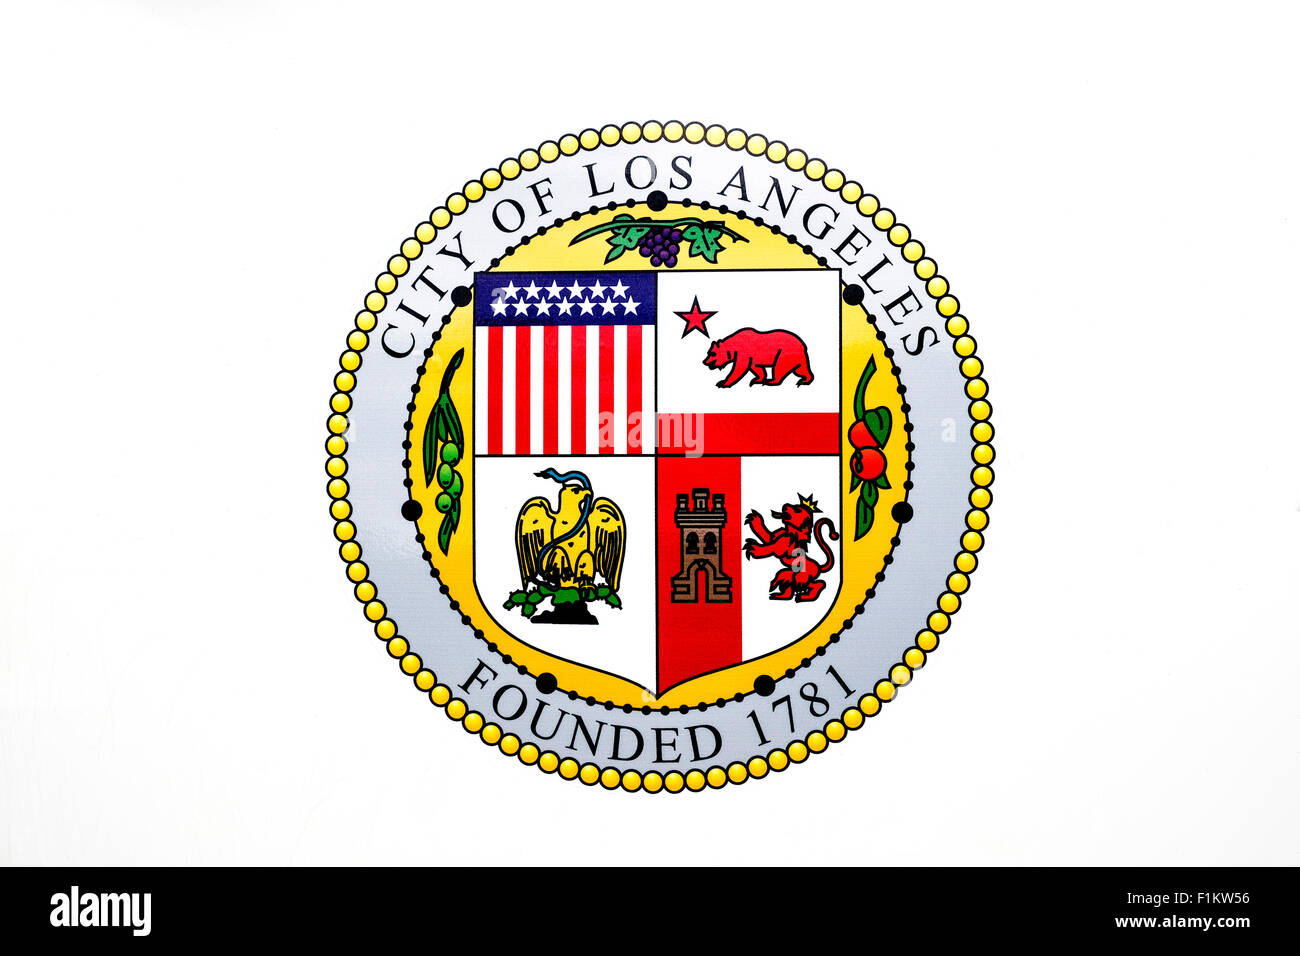 The Los Angeles Police emblem Stock Photo - Alamy